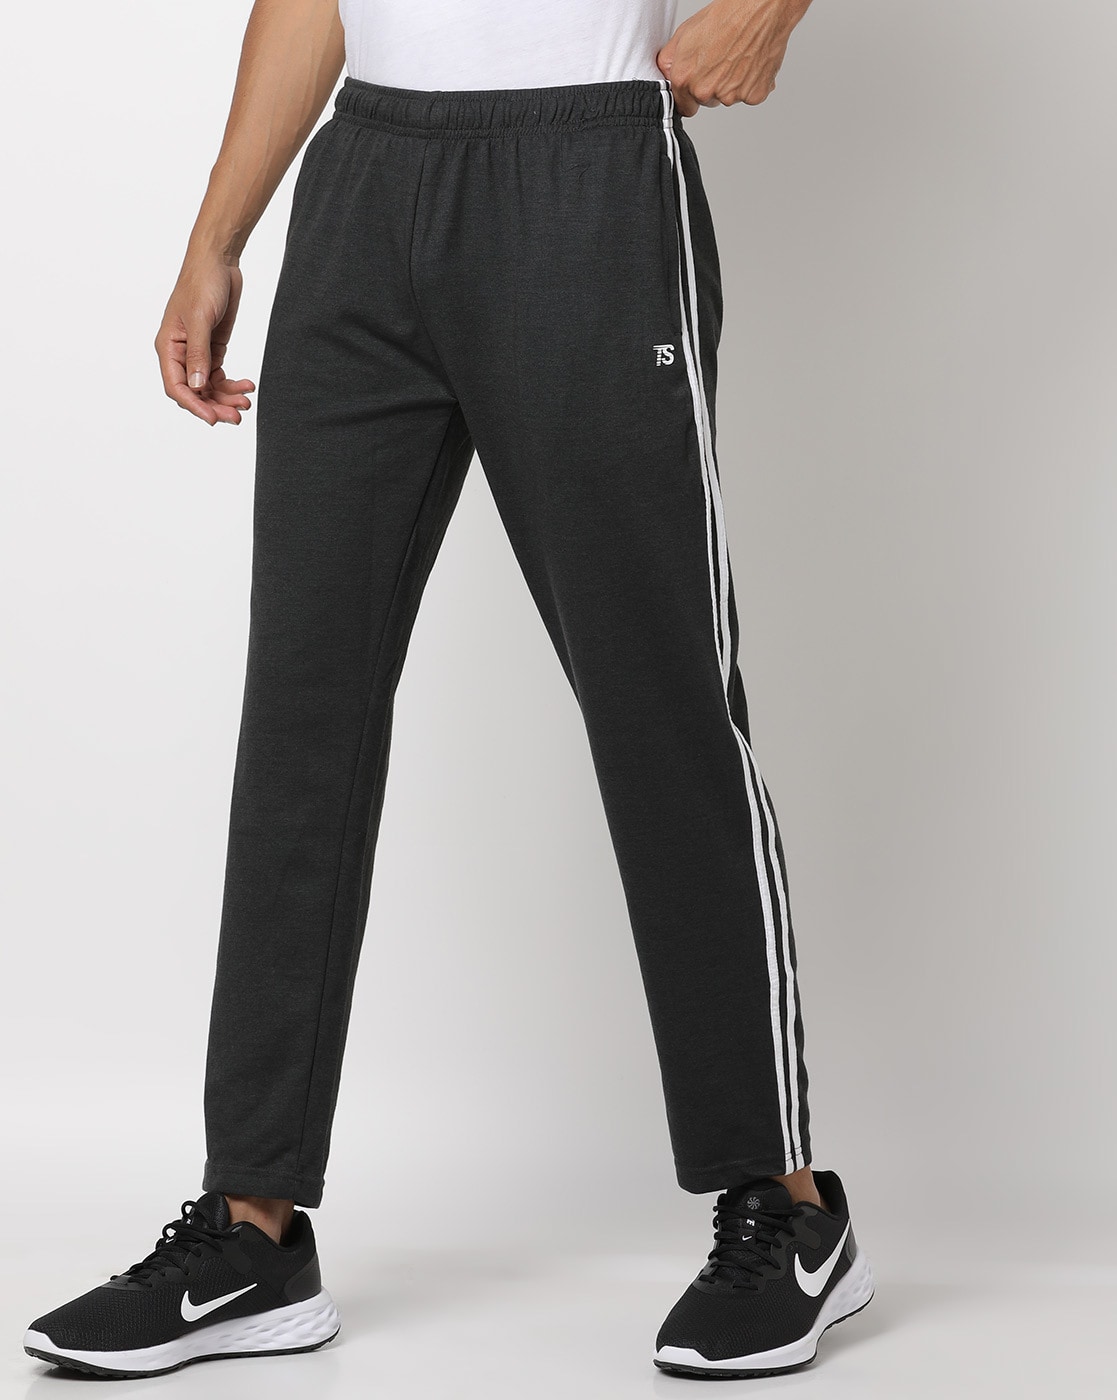 Buy Charcoal Grey Track Pants for Men by Teamspirit Online  Ajiocom